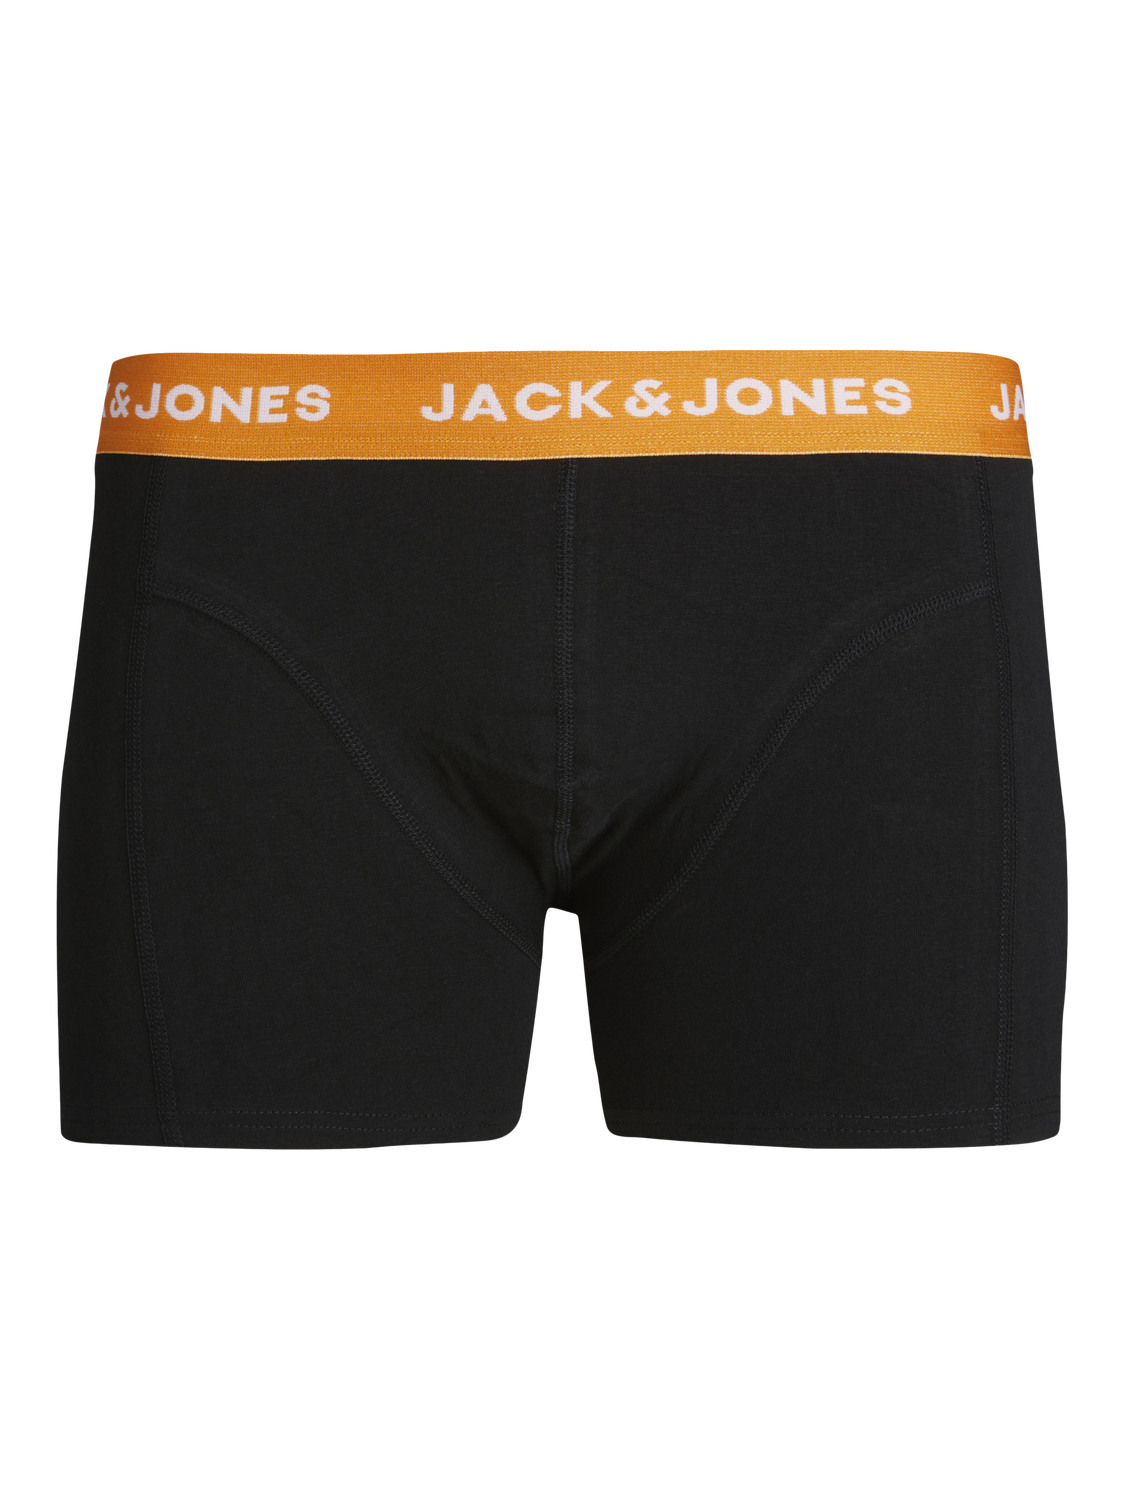 Jack & Jones Plus Size 3-pack Boxershorts -Dark Green - 12259899